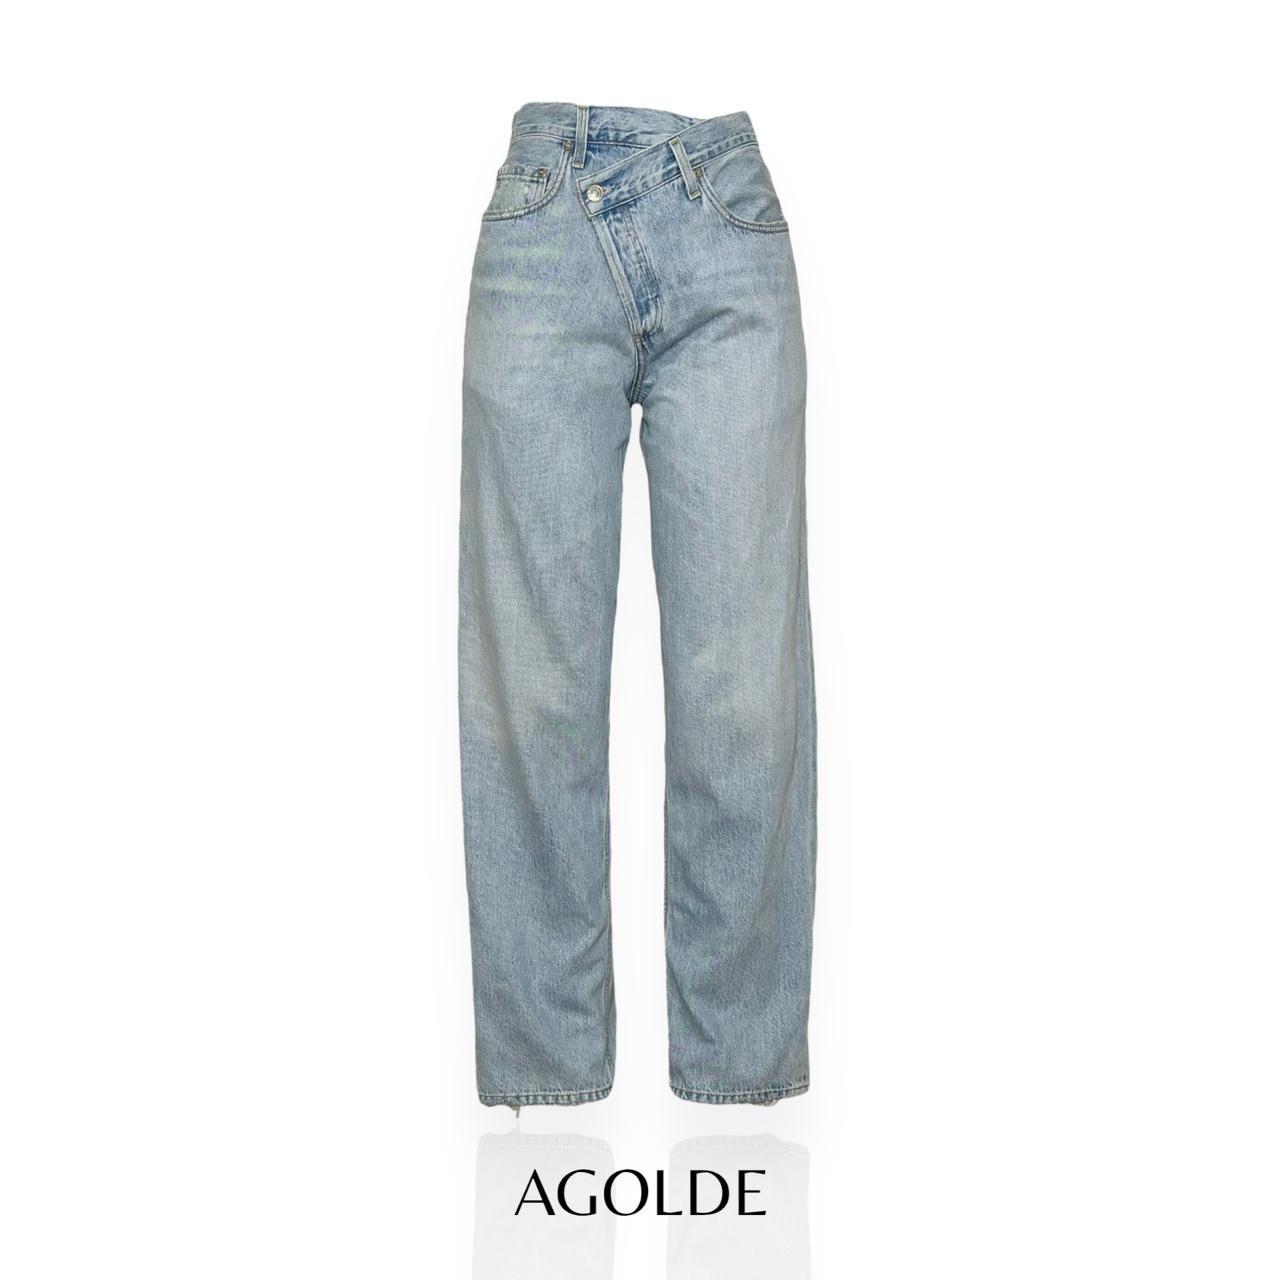 AGOLDE Criss Cross Upsized Jeans - Suburbia - New - Depop